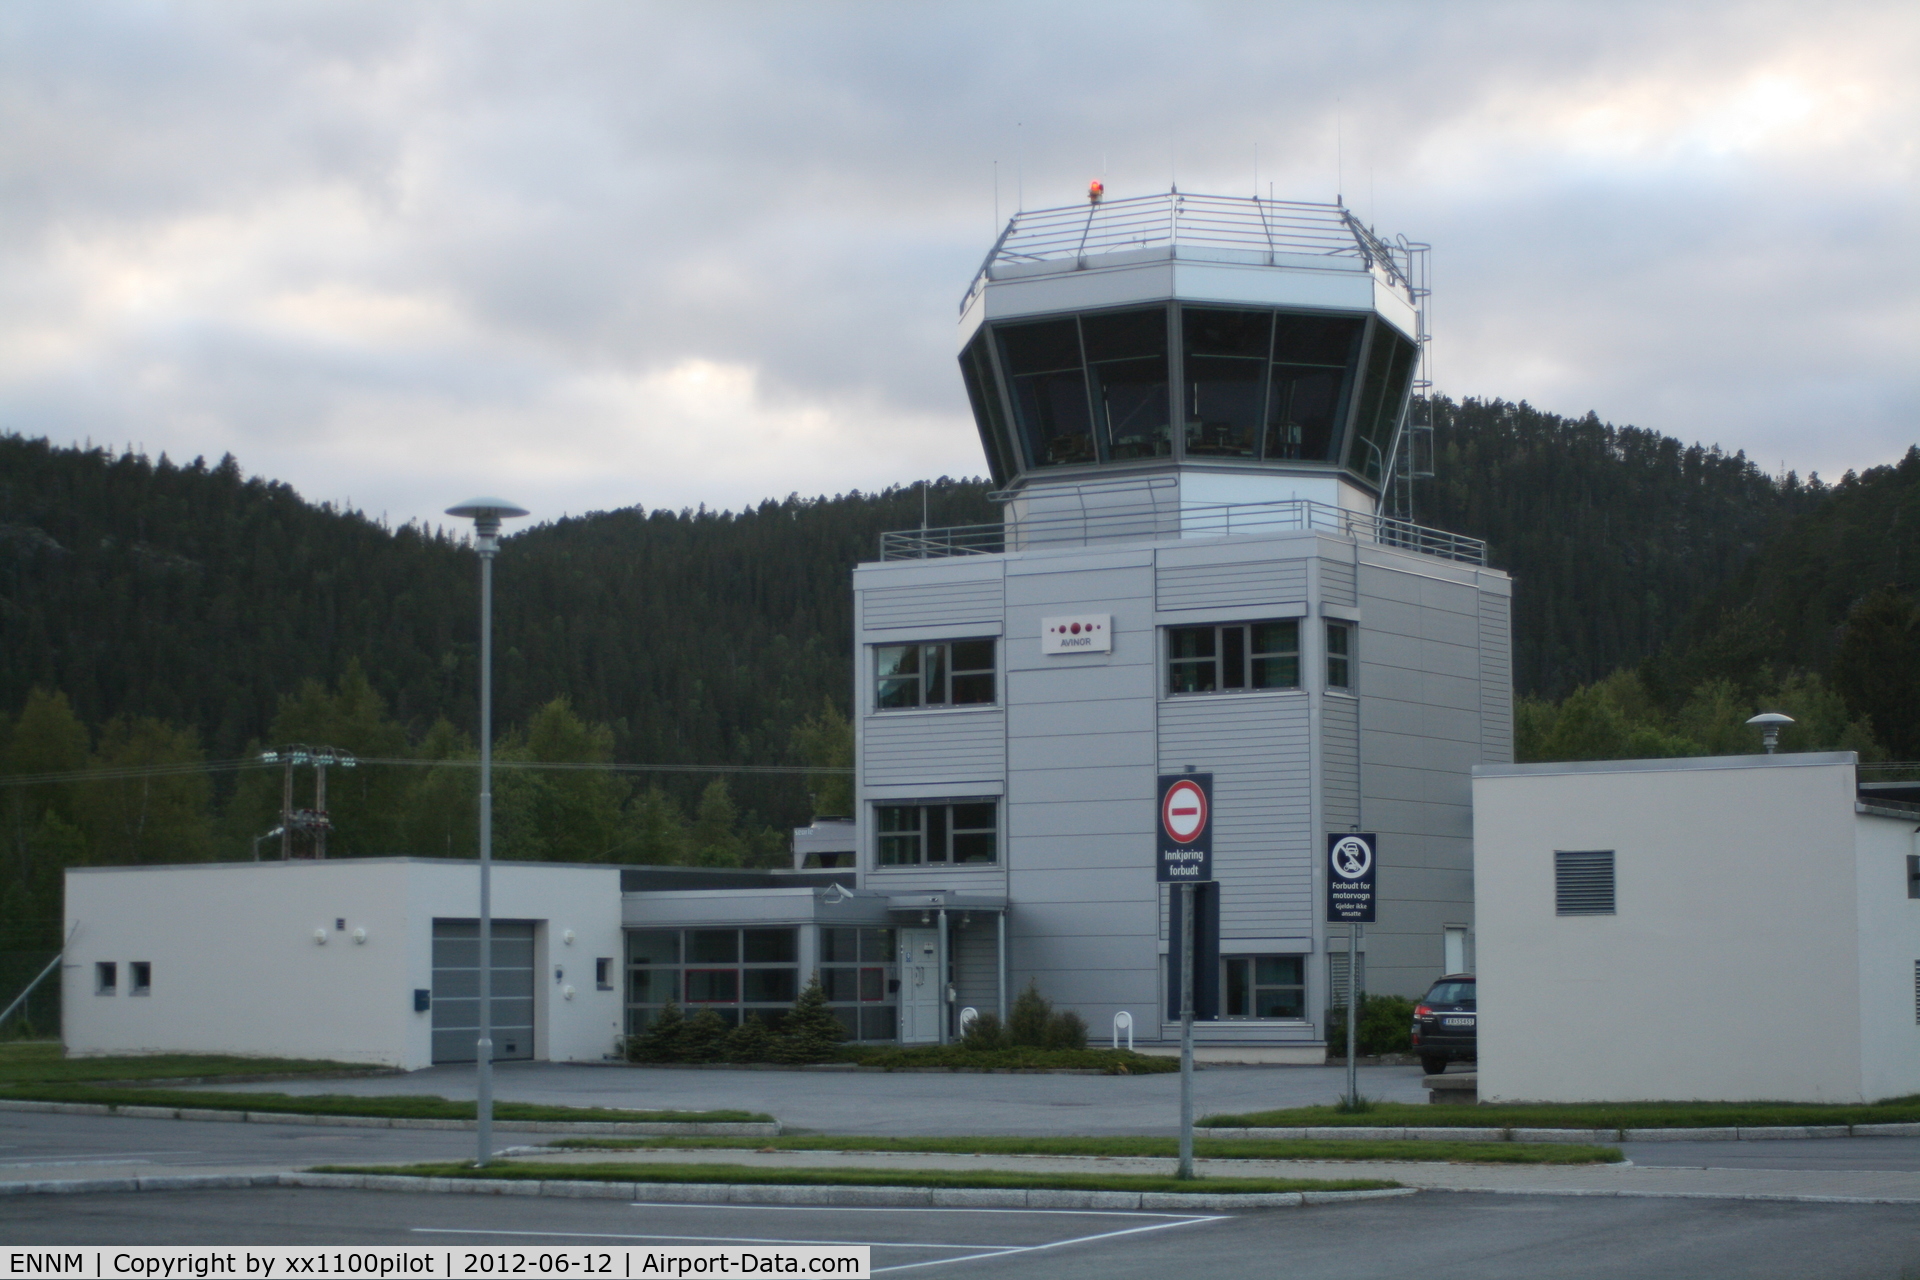 Namsos Airport, Namsos, Nord-Trøndelag Norway (ENNM) - The new tower.